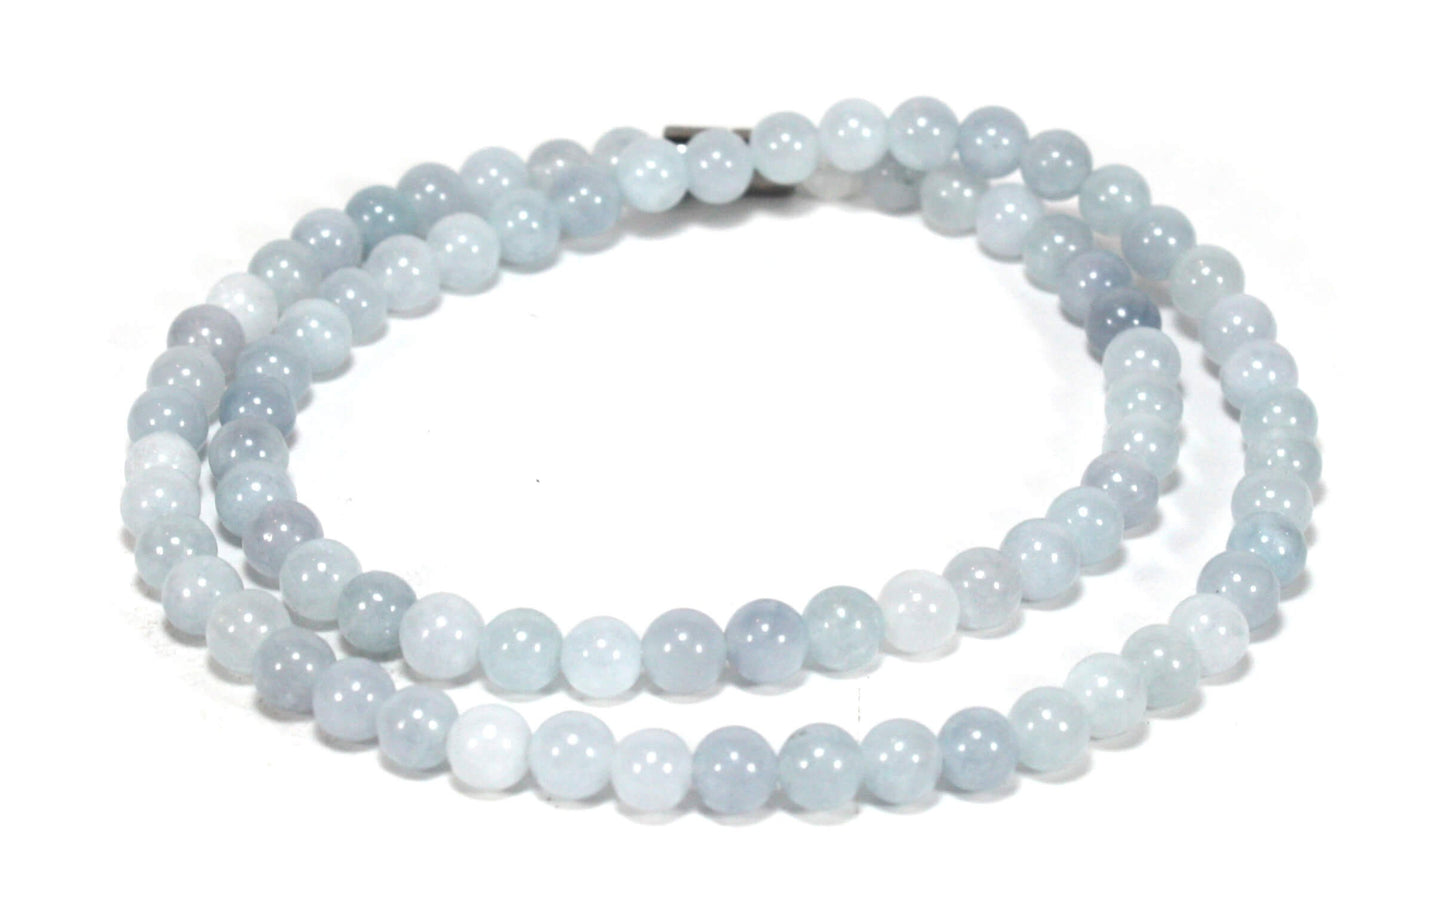 Aquamarine Necklace for Men/Women Genuine Aquamarine Jewelry - March Birthstone - Peace of Mind - Serenity - Clarity